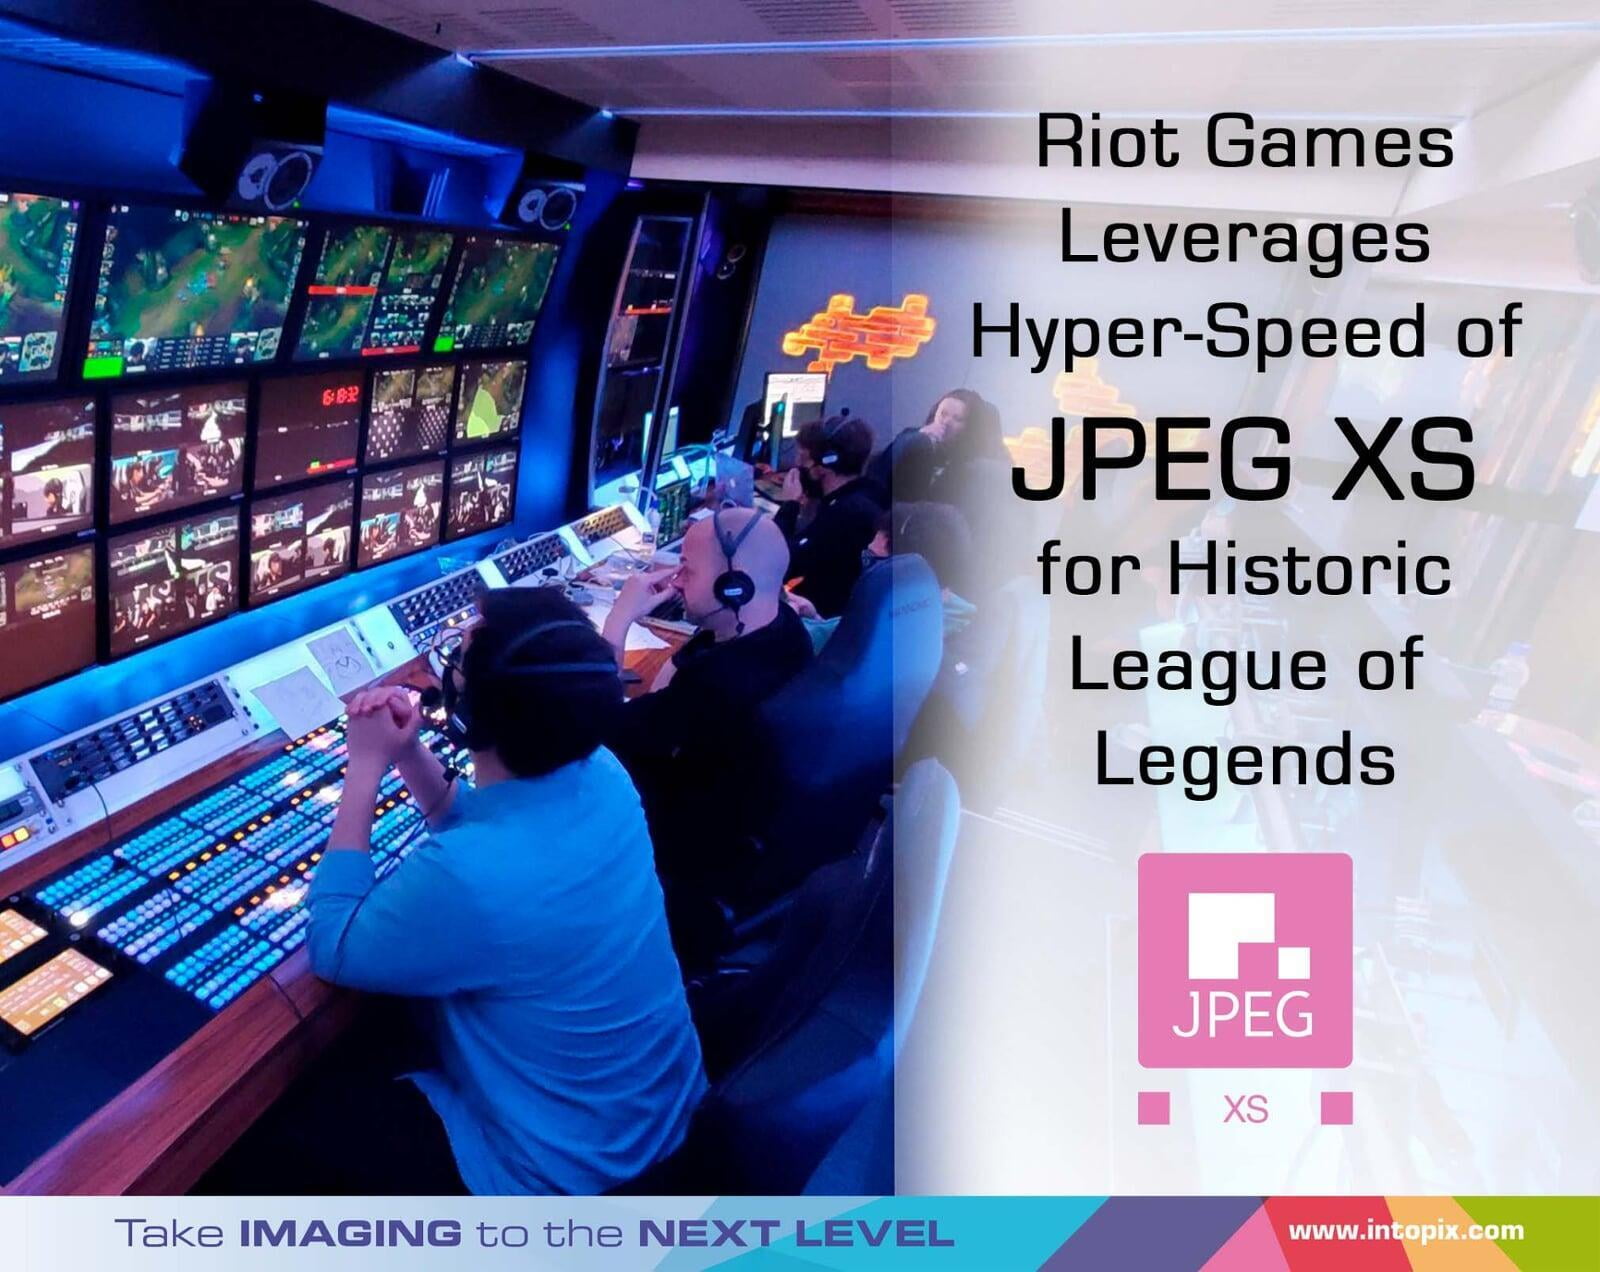 Riot Gamesは、アイスランドで開催された歴史的なLeague of LegendsとValorantのイベントにJPEG XSの超高速通信を活用